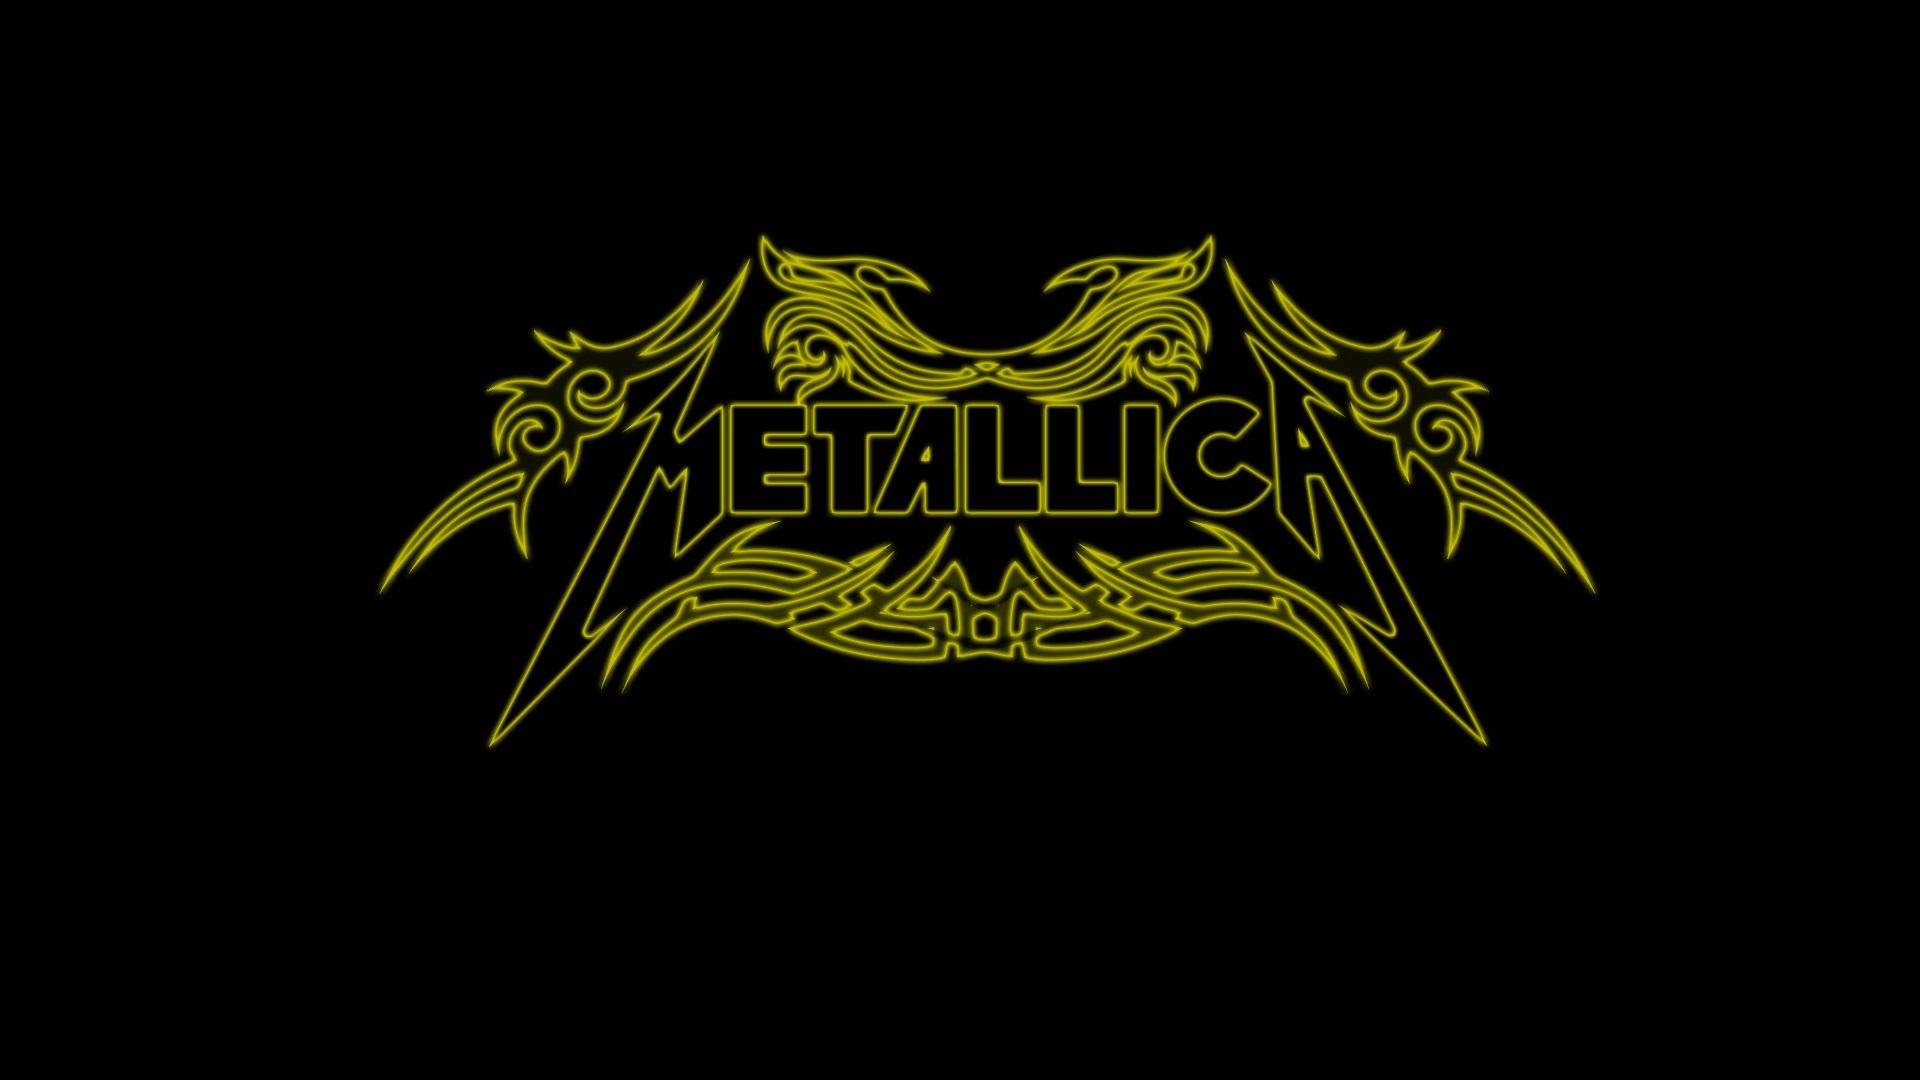 Metallica Wallpaper Widescreen. Metallica, Picture